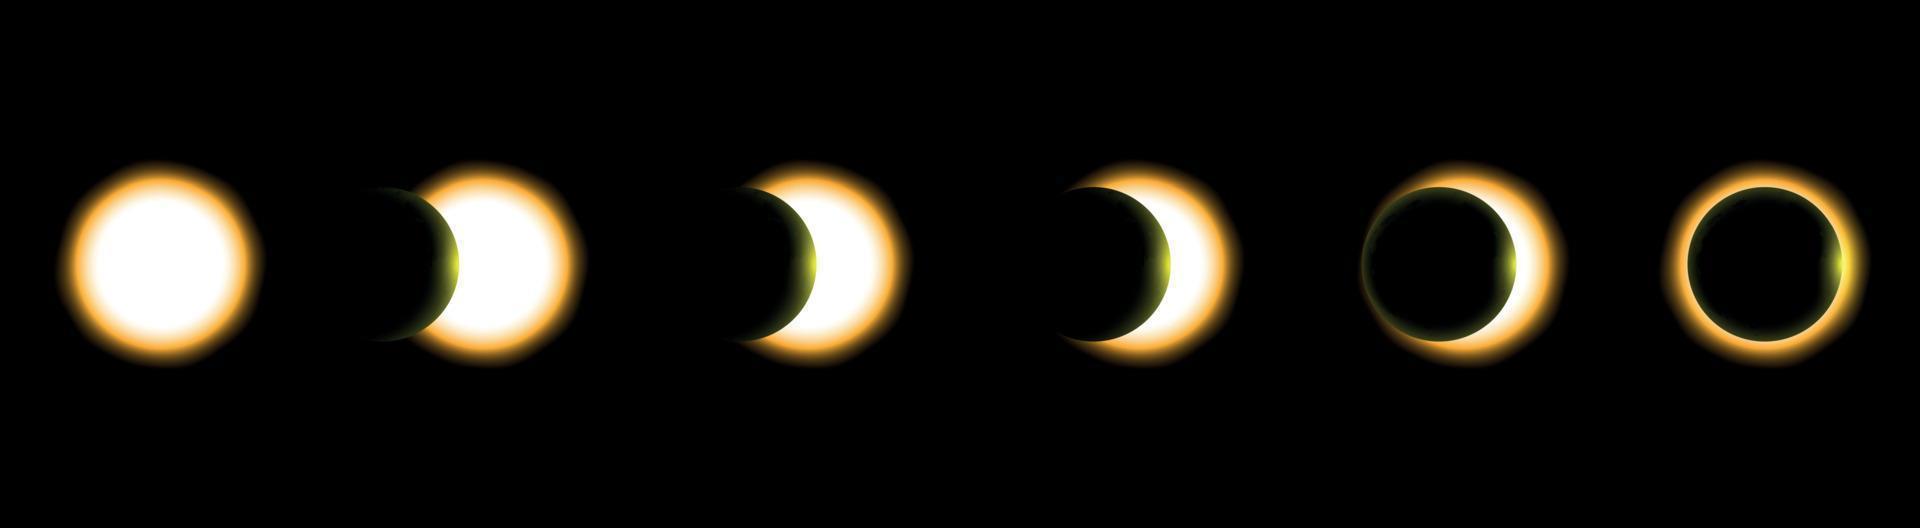 eclipse solar total, eclipse de sol vector